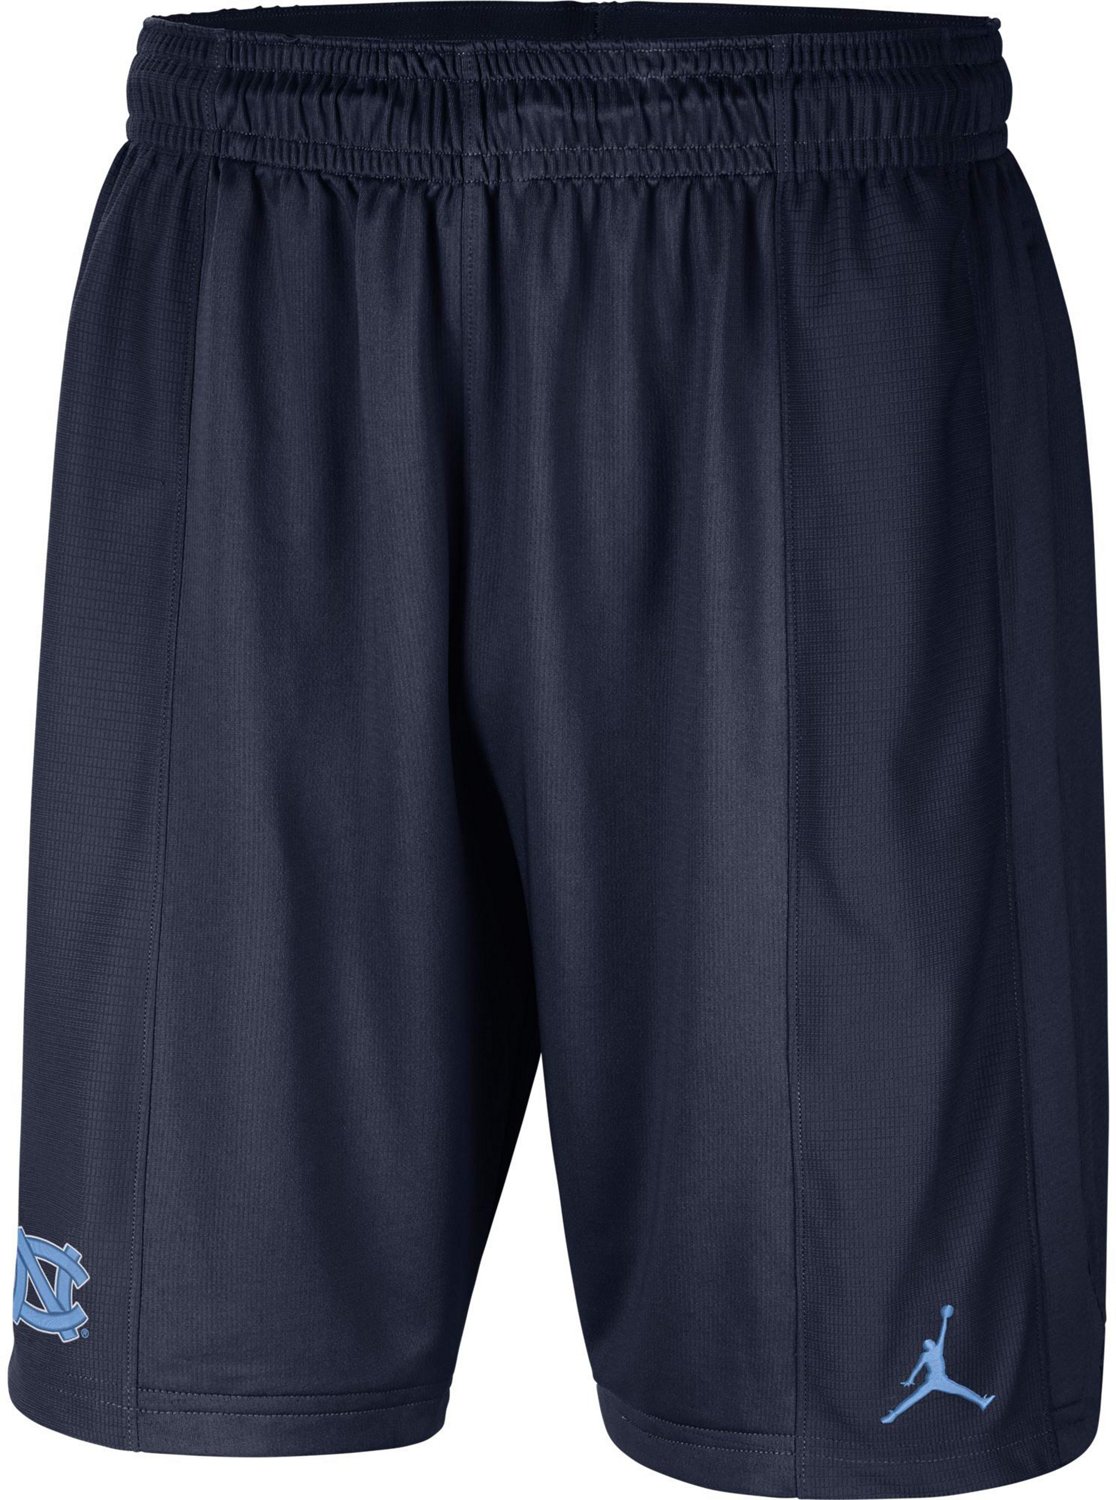 Jordan Men’s University of North Carolina Knit Shorts 10 in | Academy